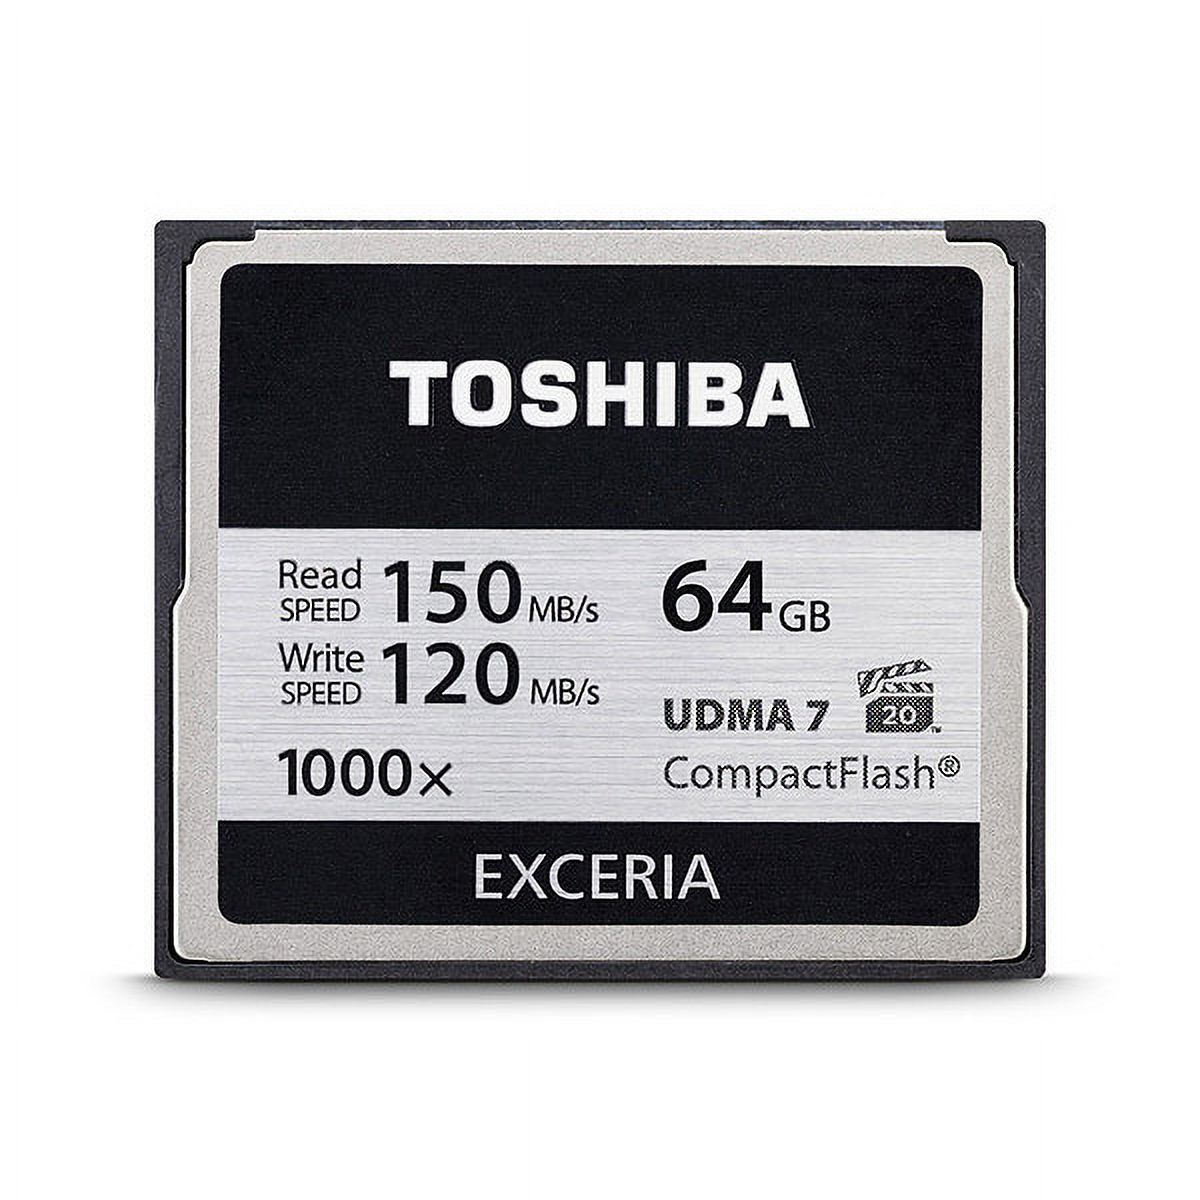 Toshiba EXCERIA - Flash memory card - 64 GB - 1000x - CompactFlash - image 2 of 2